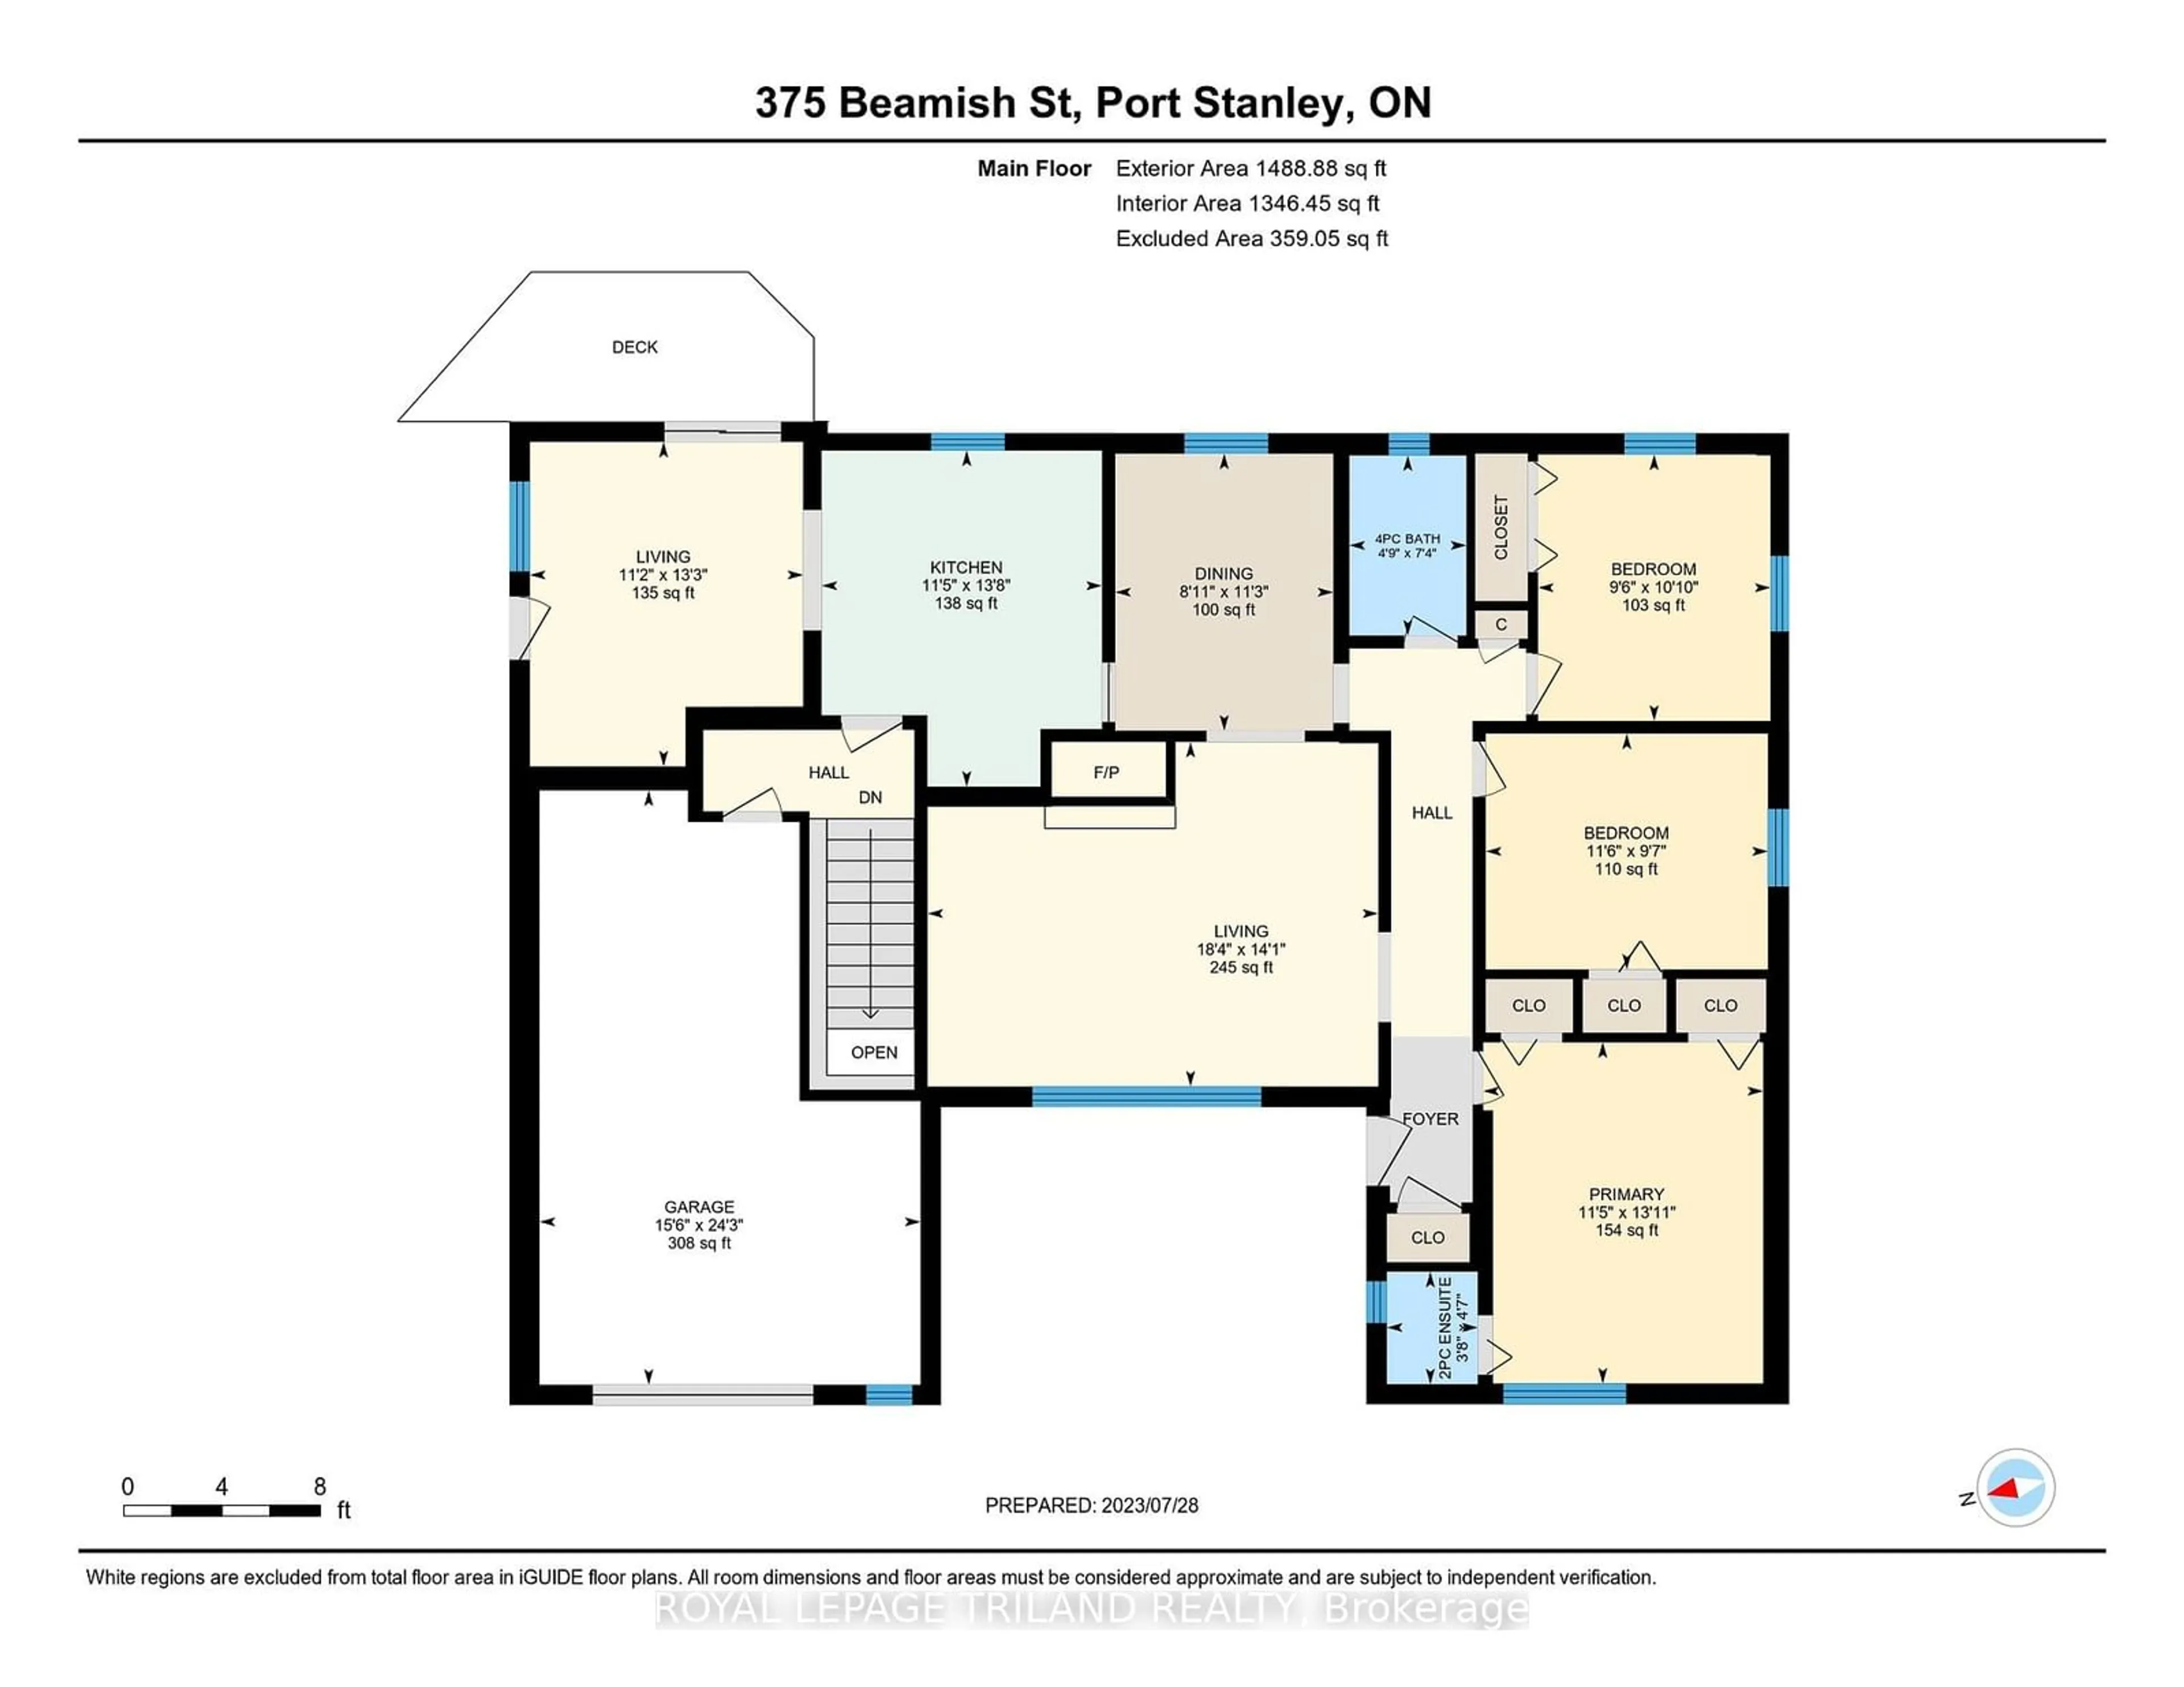 Floor plan for 375 Beamish St, Central Elgin Ontario N5L 1H5